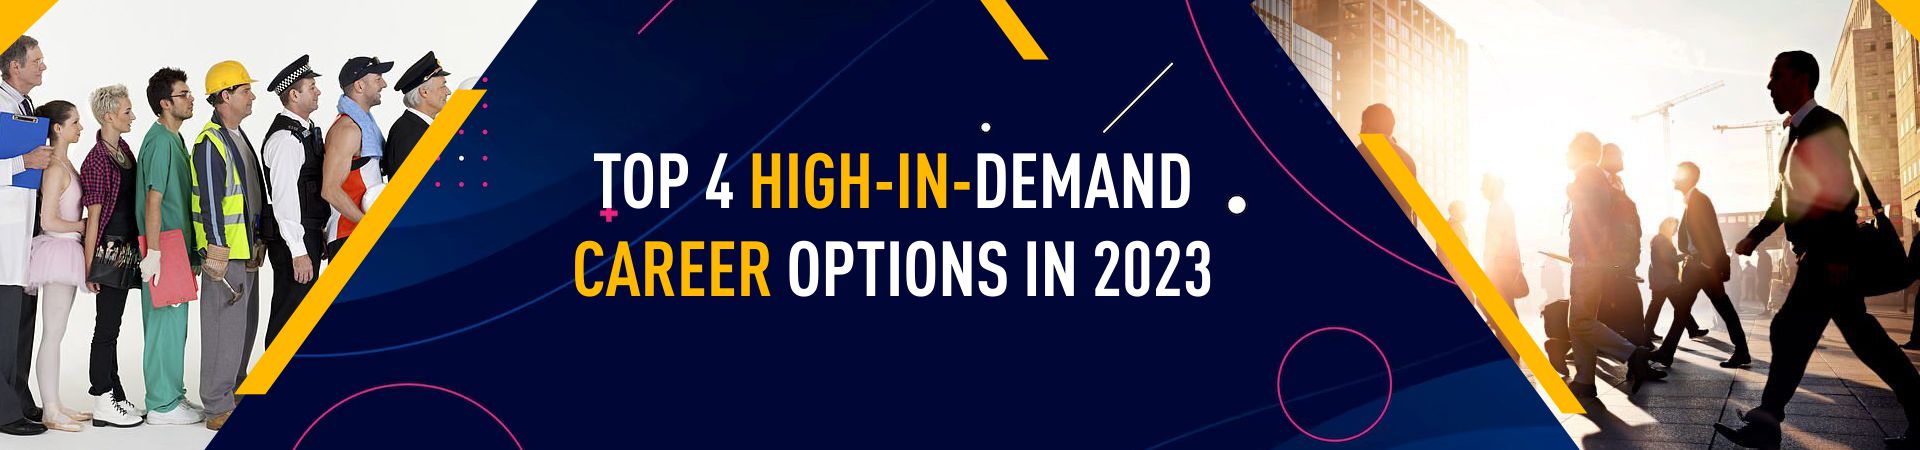 Top 4 high-in-demand career options in 2023